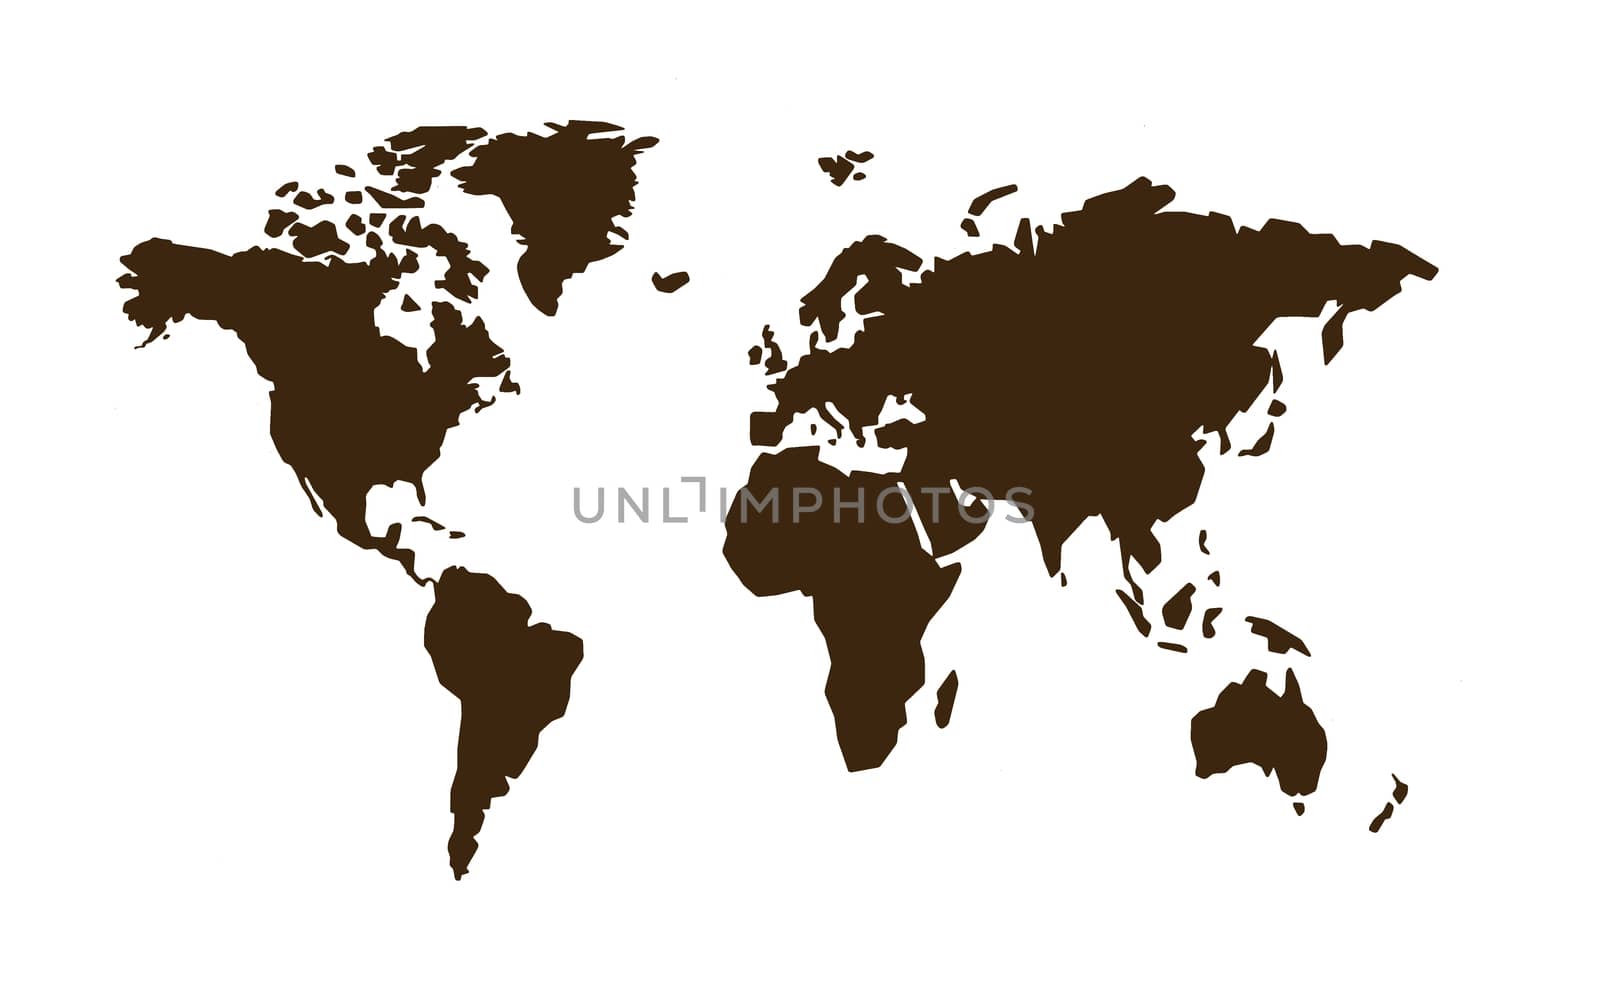 World map by nanDphanuwat